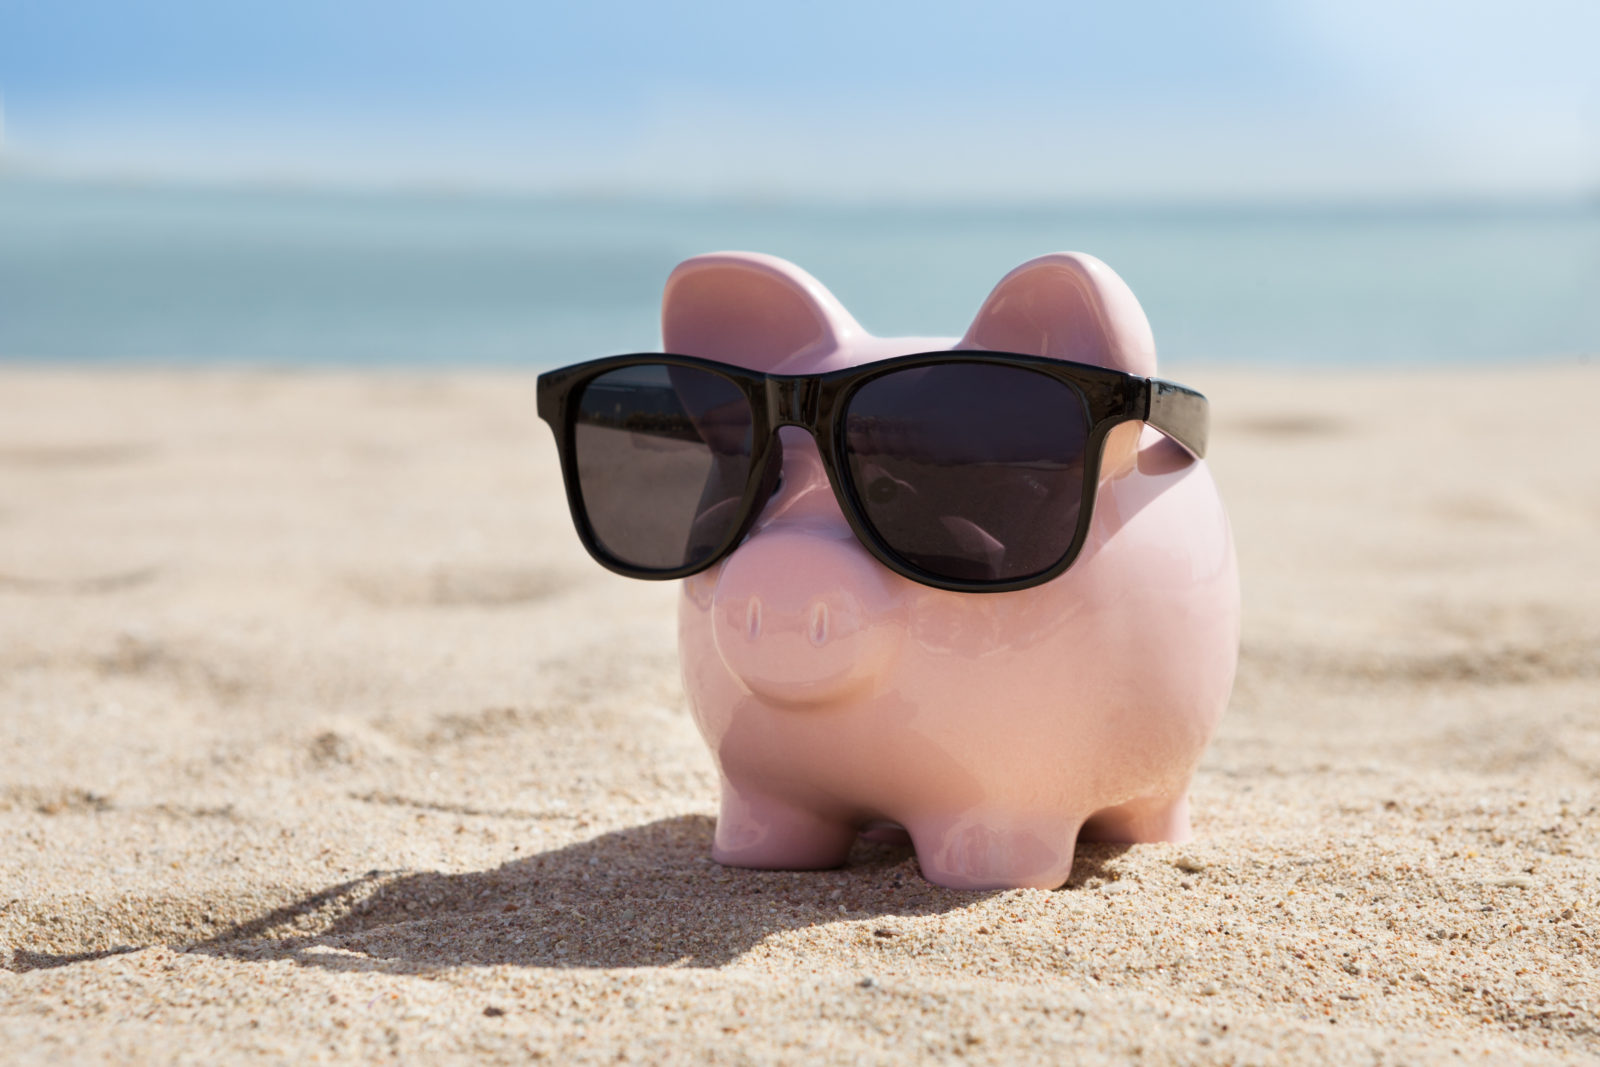 piggy bank on a beach | ROI of TCT Portal vs. Excel